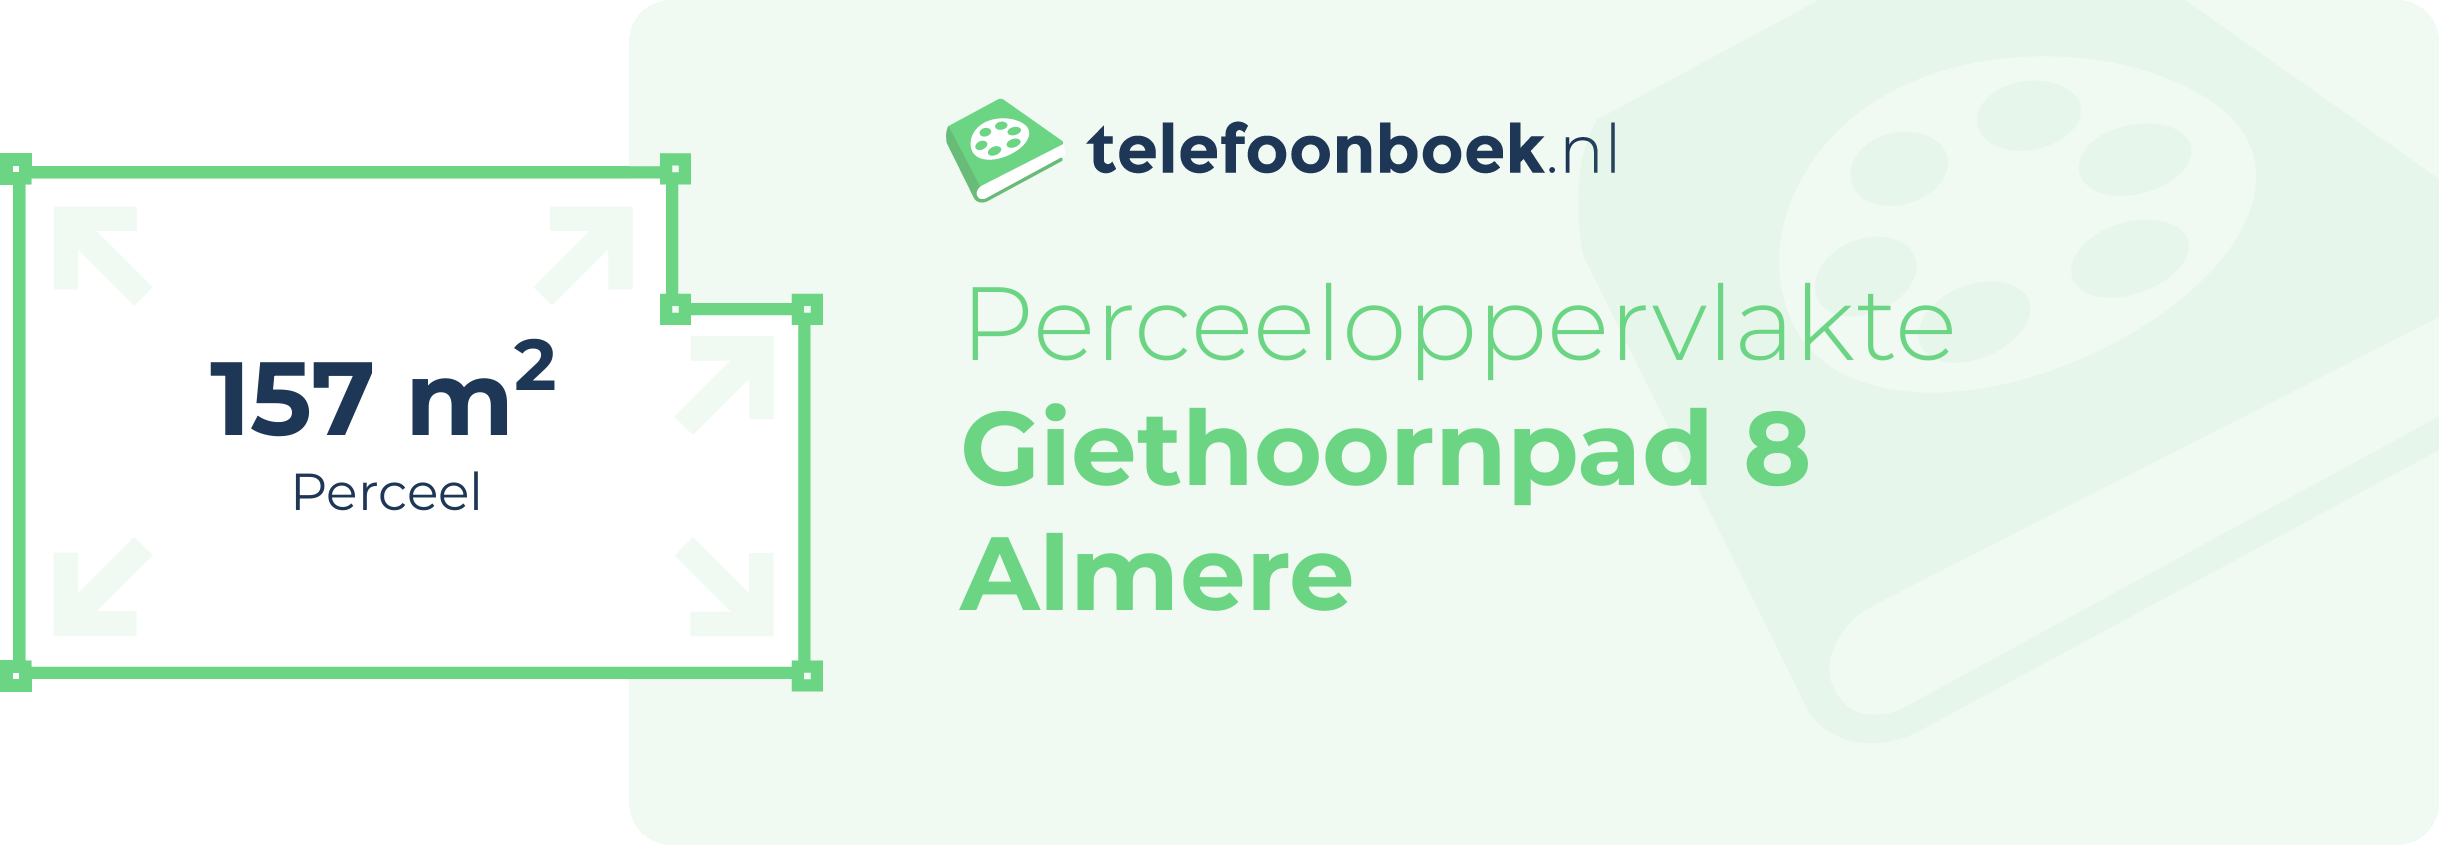 Perceeloppervlakte Giethoornpad 8 Almere